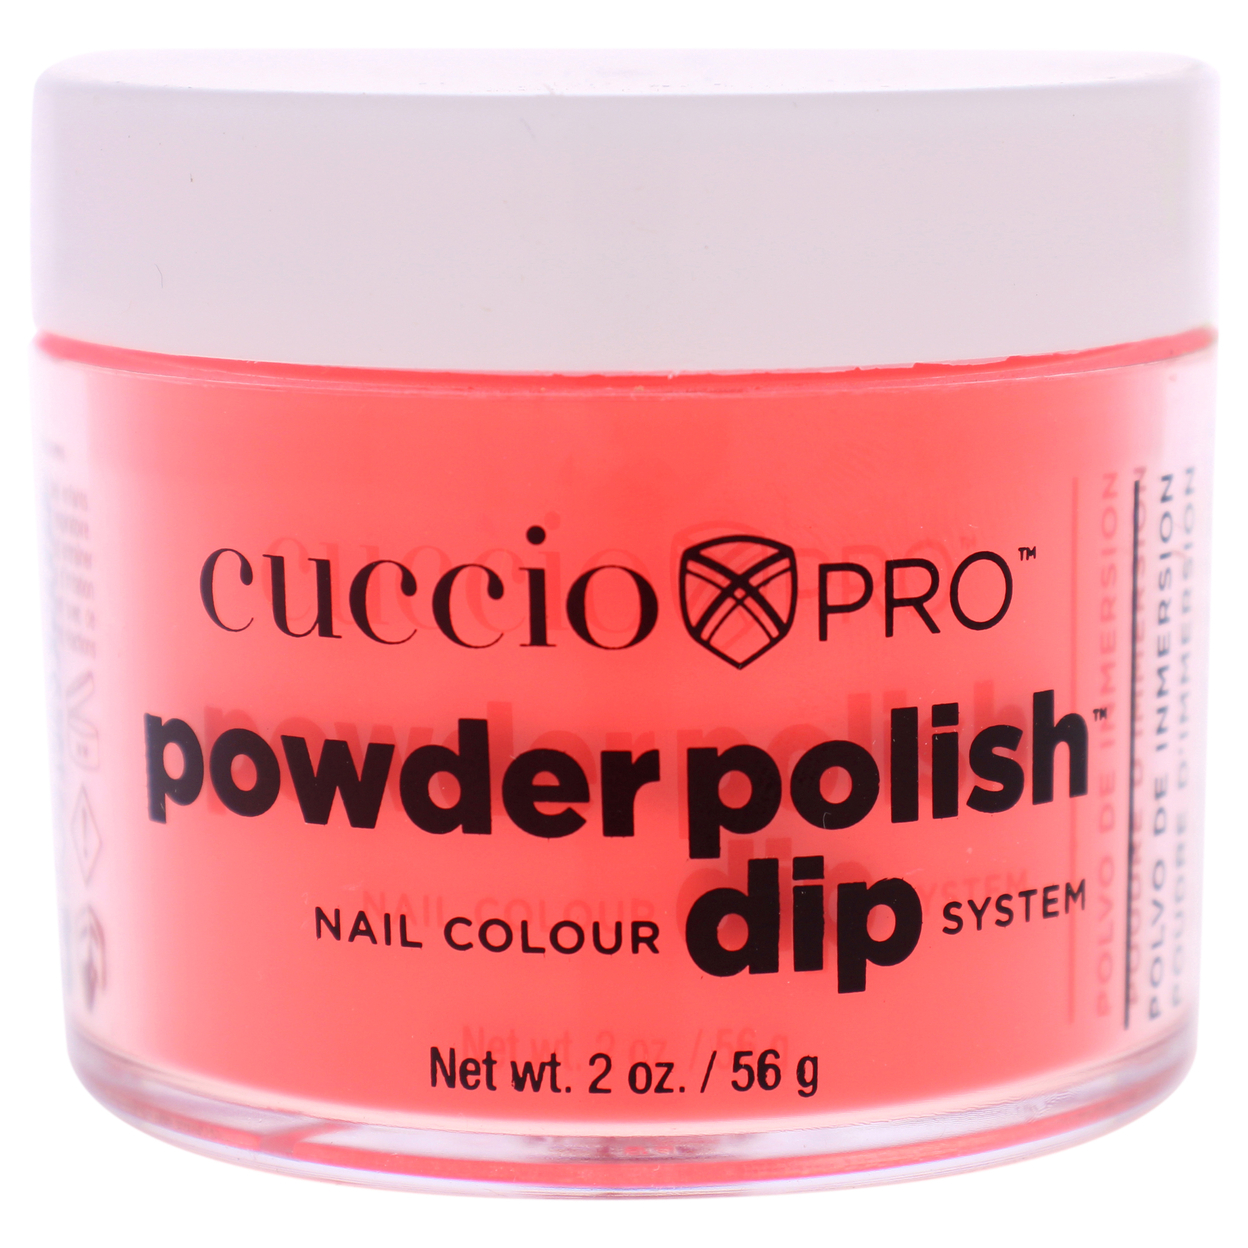 Cuccio Colour Pro Powder Polish Nail Colour Dip System - Neon Red Nail Powder 1.6 Oz